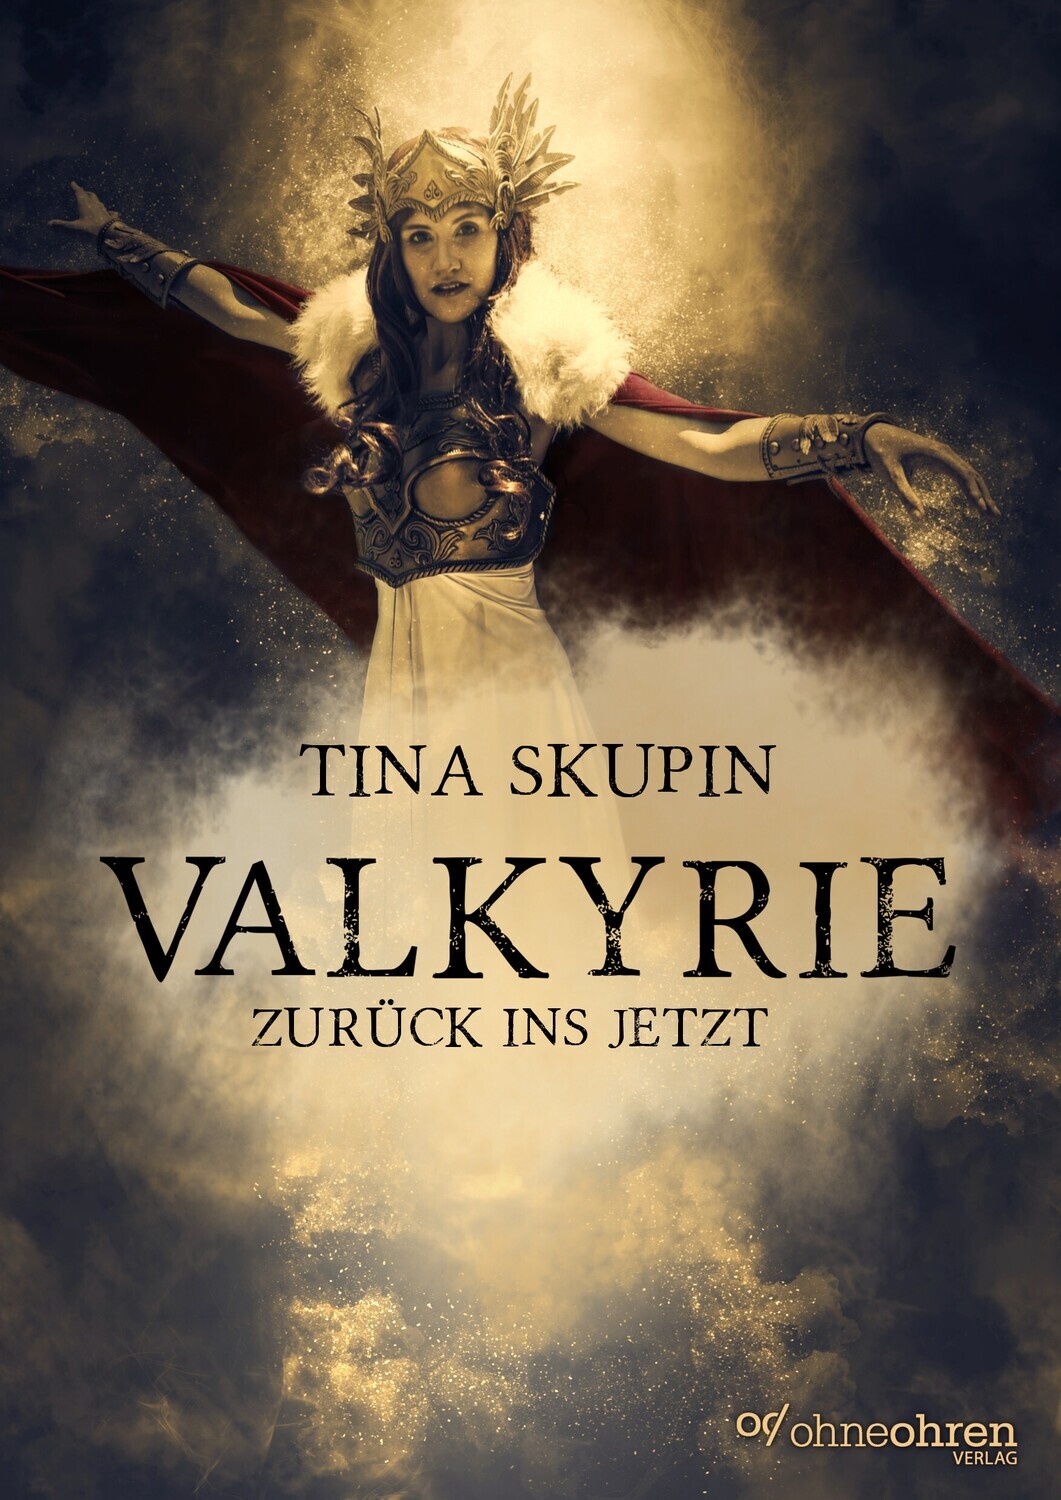 Tina Skupin: Valkyrie (Zurück ins Jetzt)